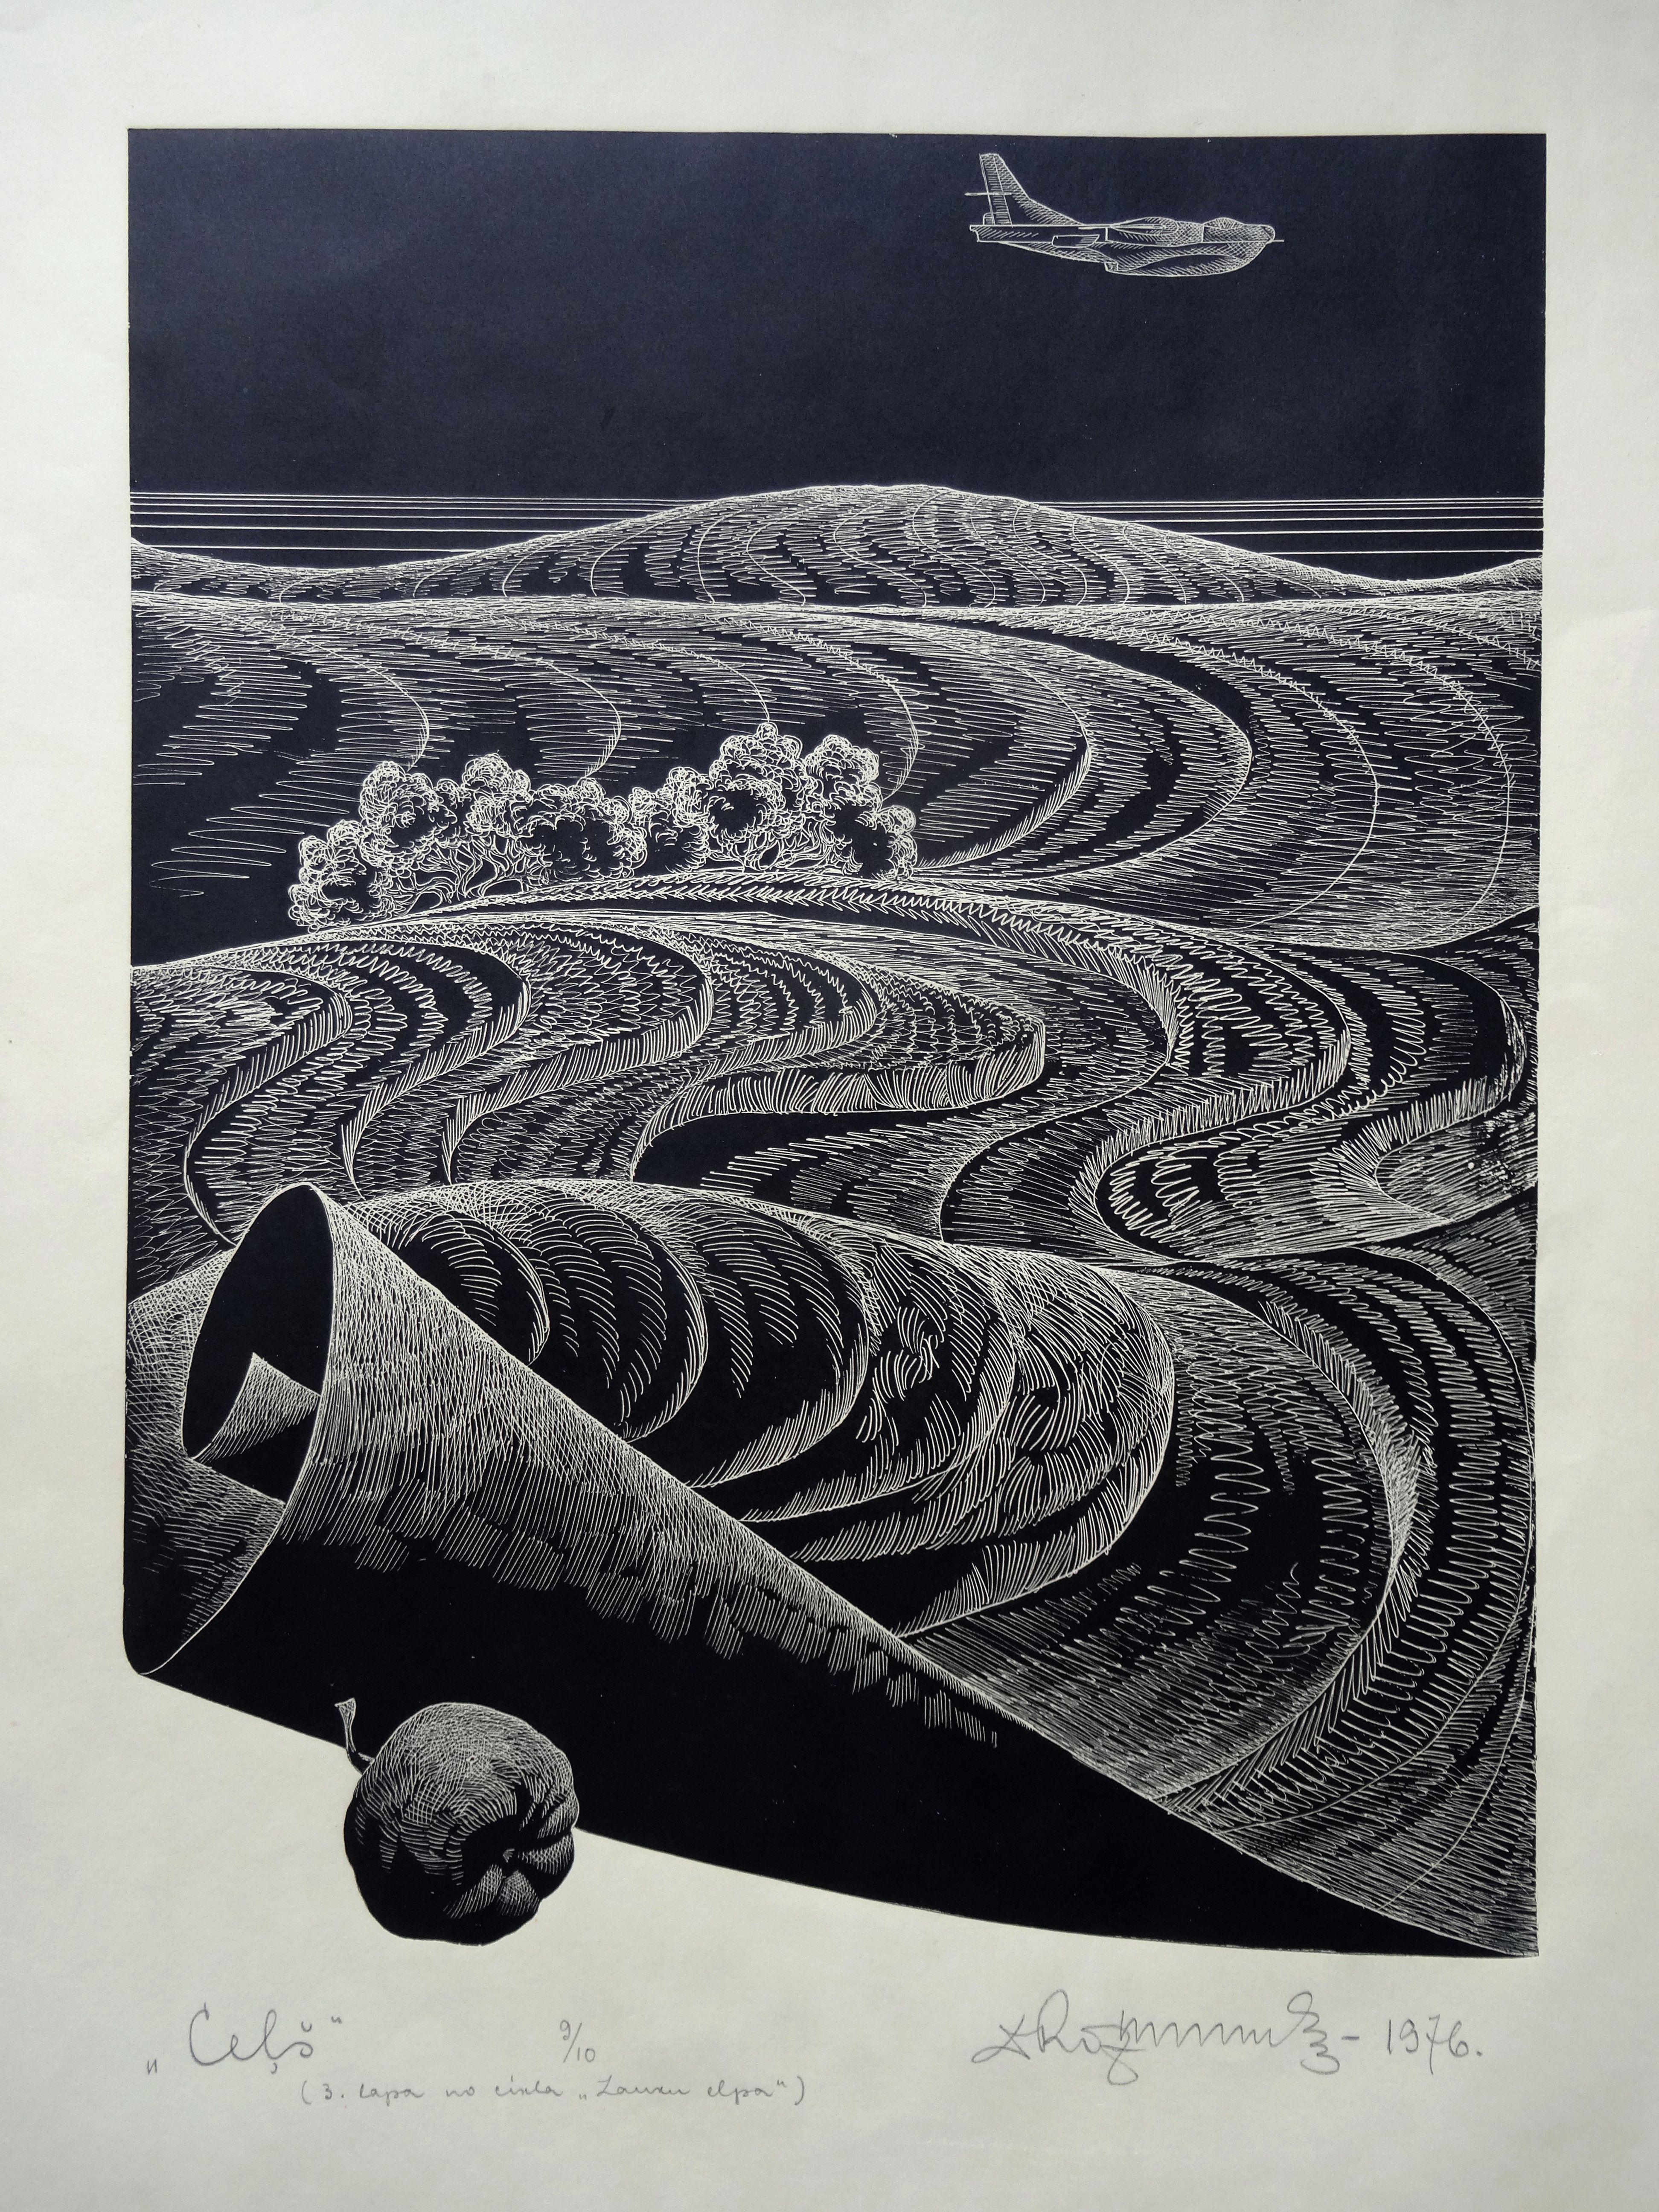 Weg. 1976, Linolschnitt, Druckgröße 65x50 cm; insgesamt 75x60 cm